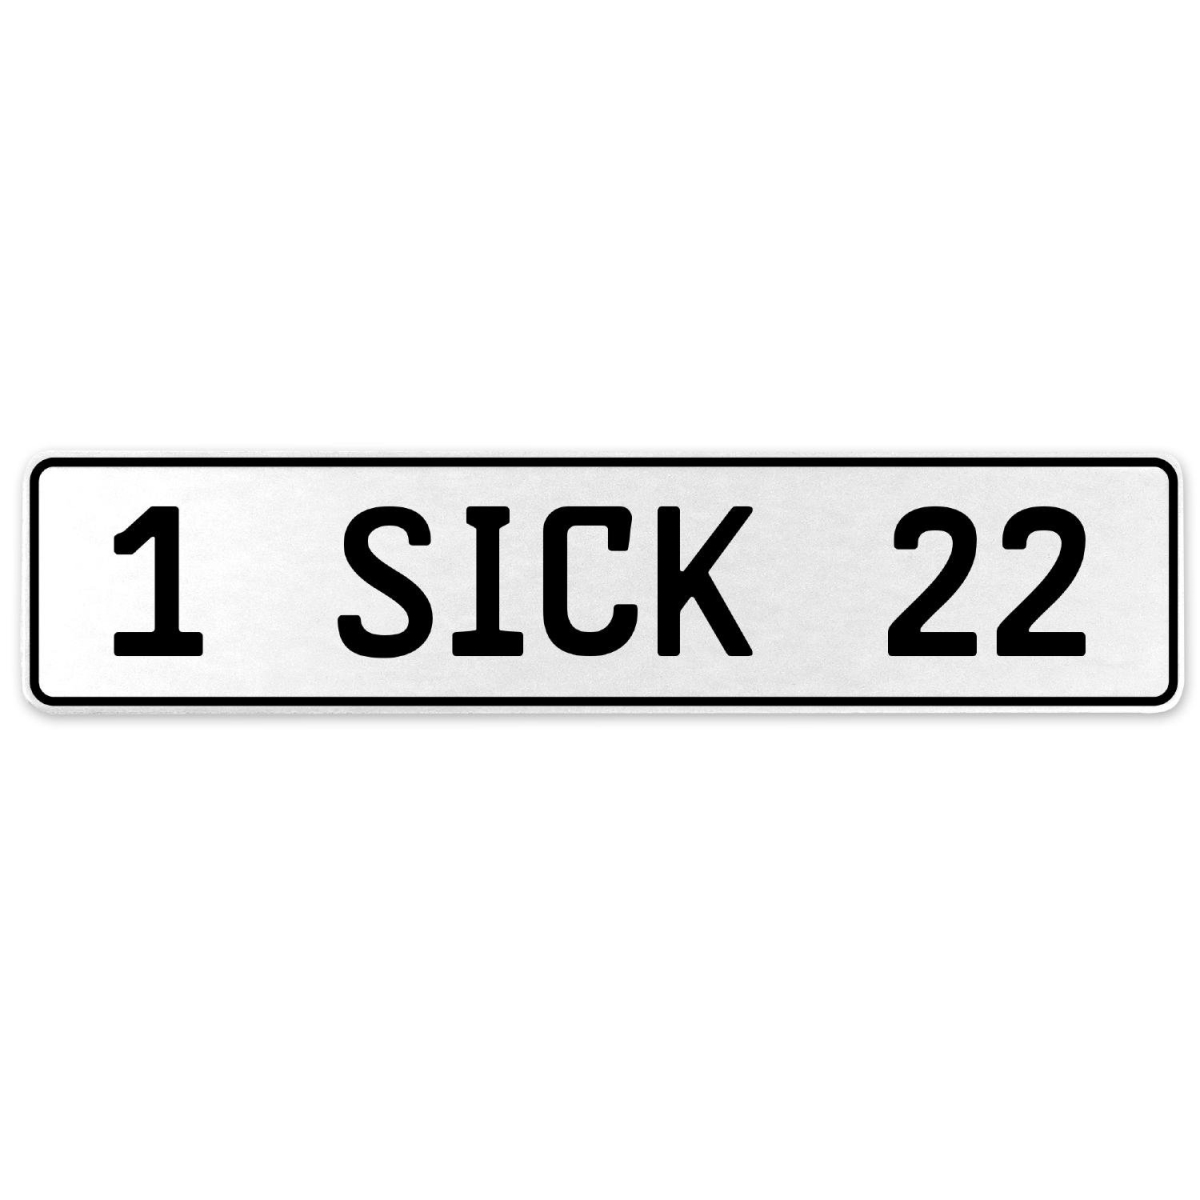 1 Sick 22 - White Aluminum Street Sign Mancave Euro Plate Name Door Sign Wall